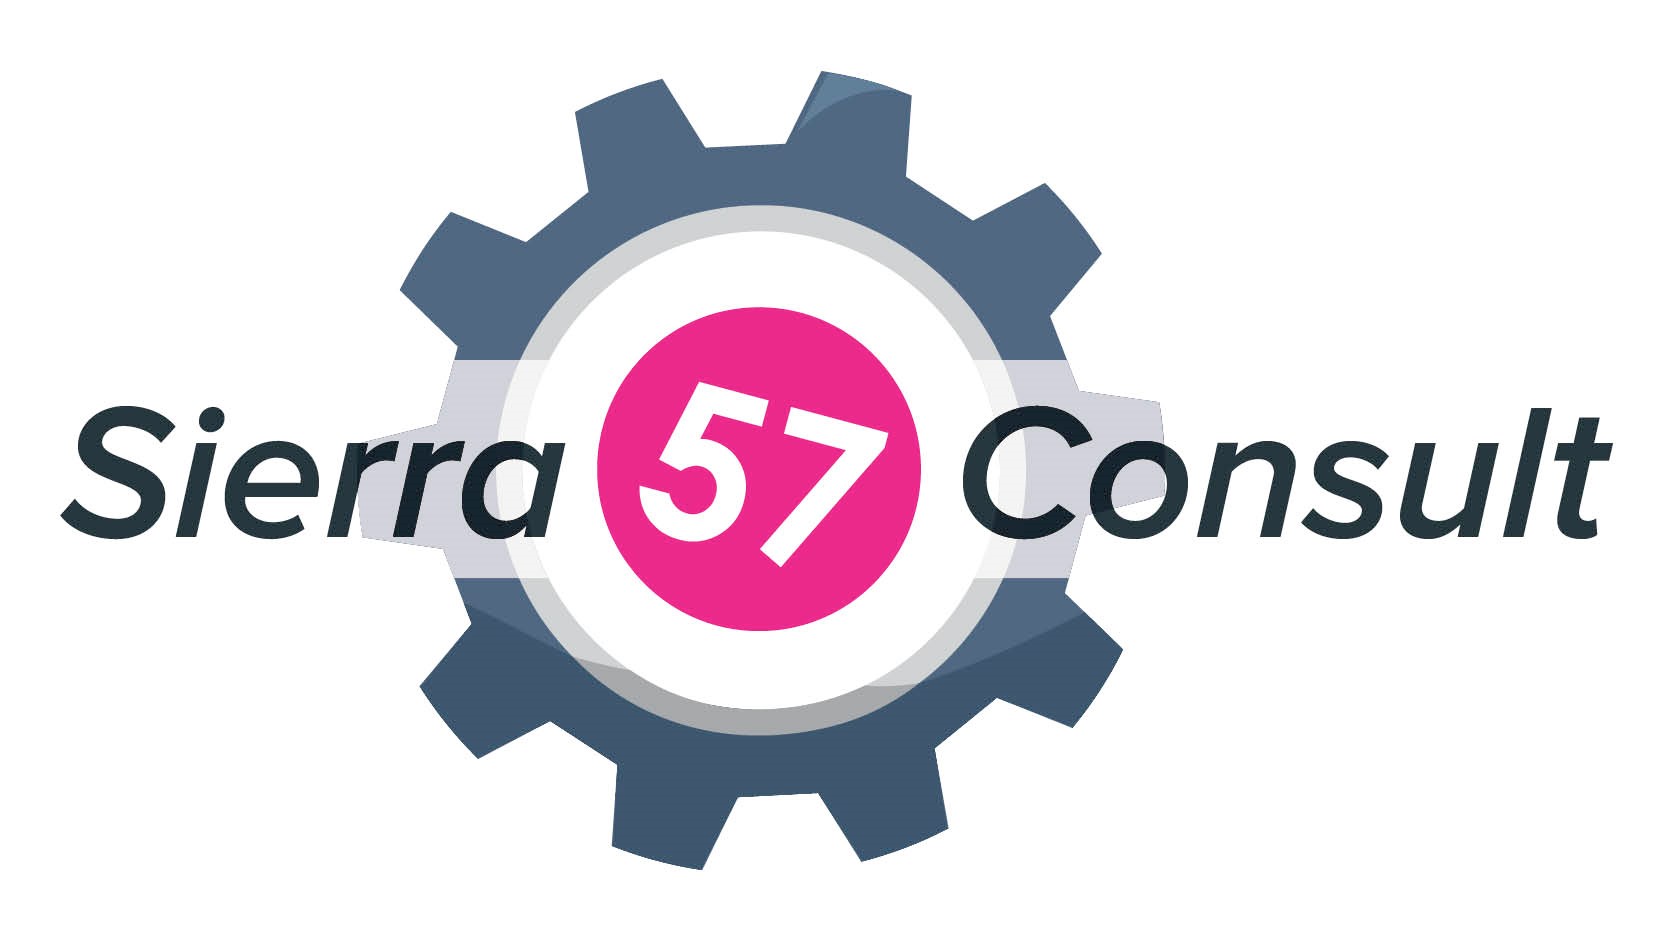 Sierra 57 Consult